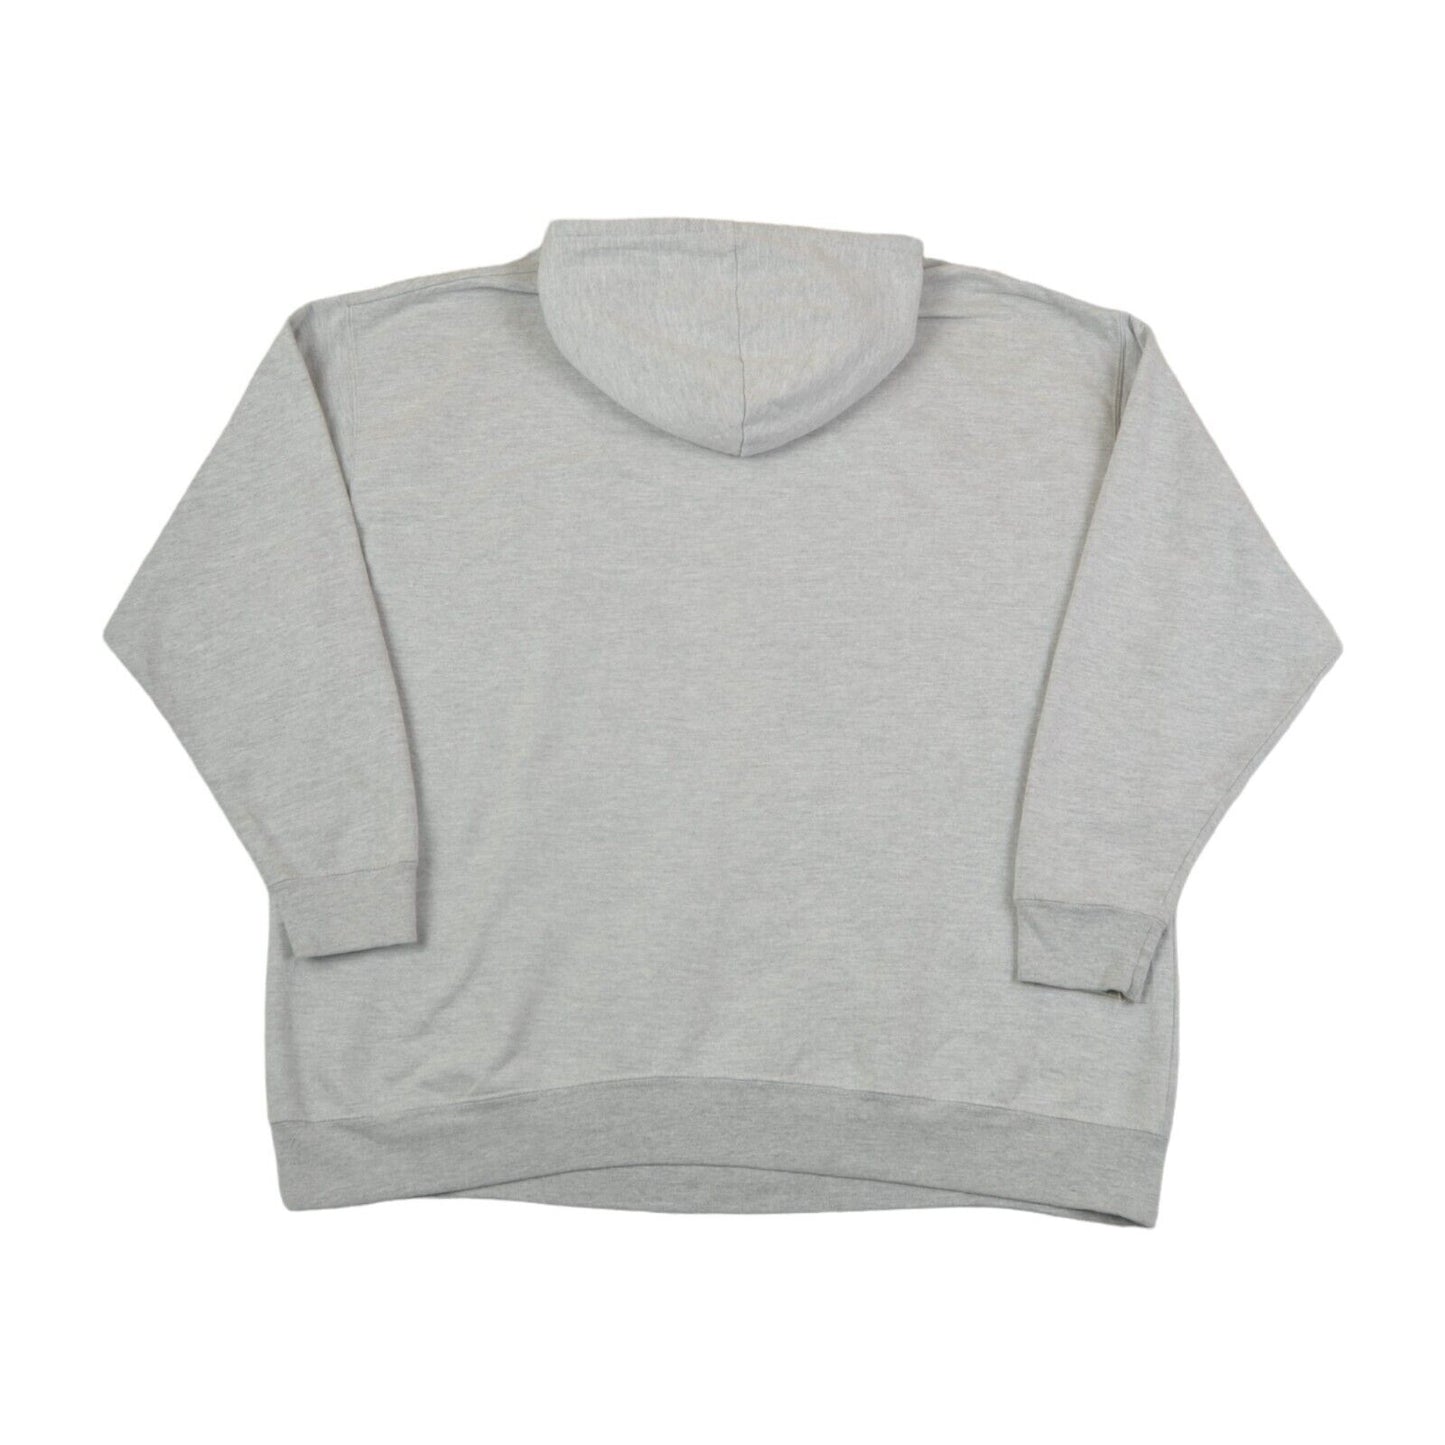 Vintage Fighting Illini Hoodie Sweatshirt Grey XXXL